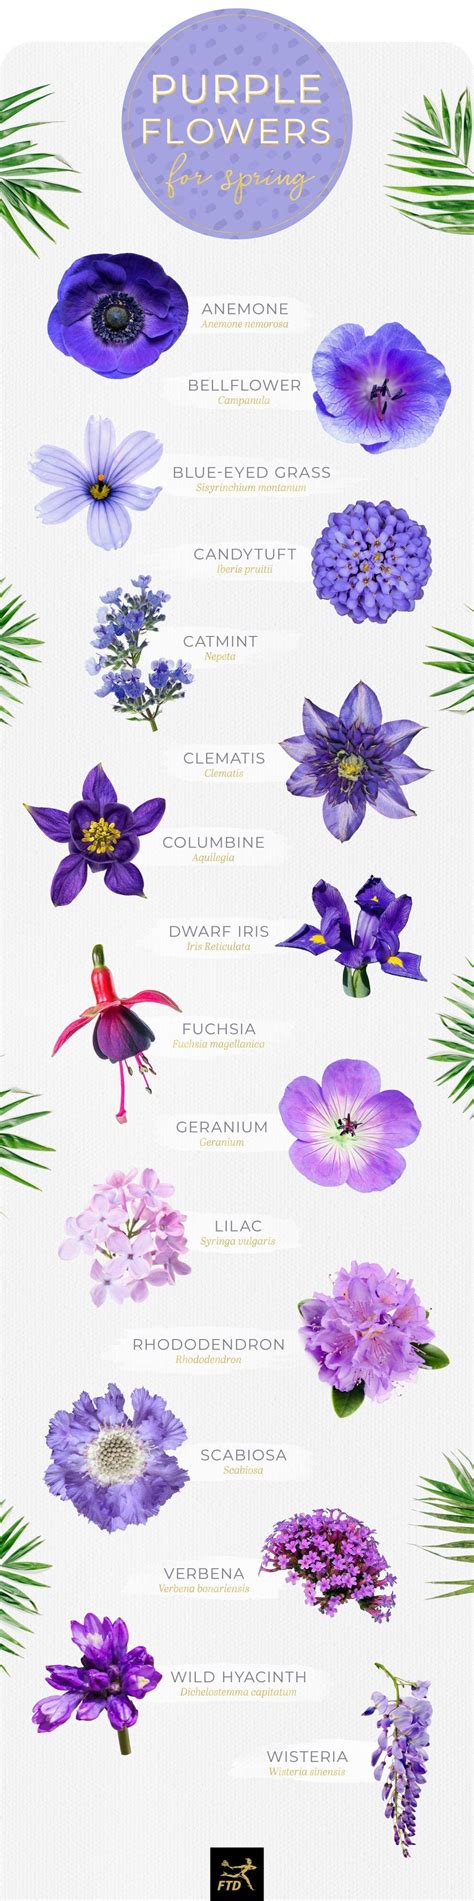 types  purple flowers ftdcom types  purple flowers small